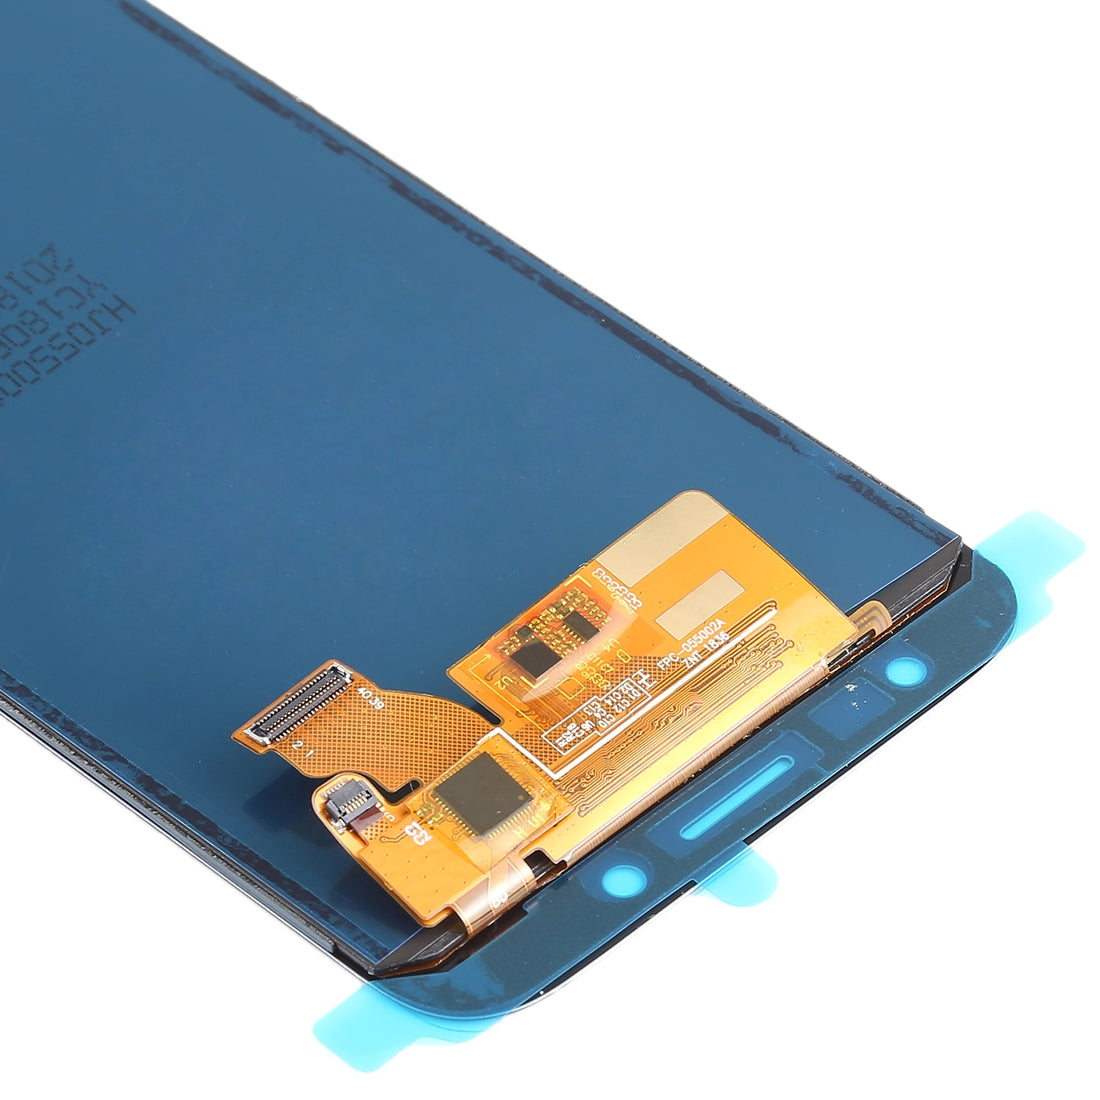 Pantalla LCD + Tactil Digitalizador (TFT) Samsung Galaxy J7 (2017) J730 Azul